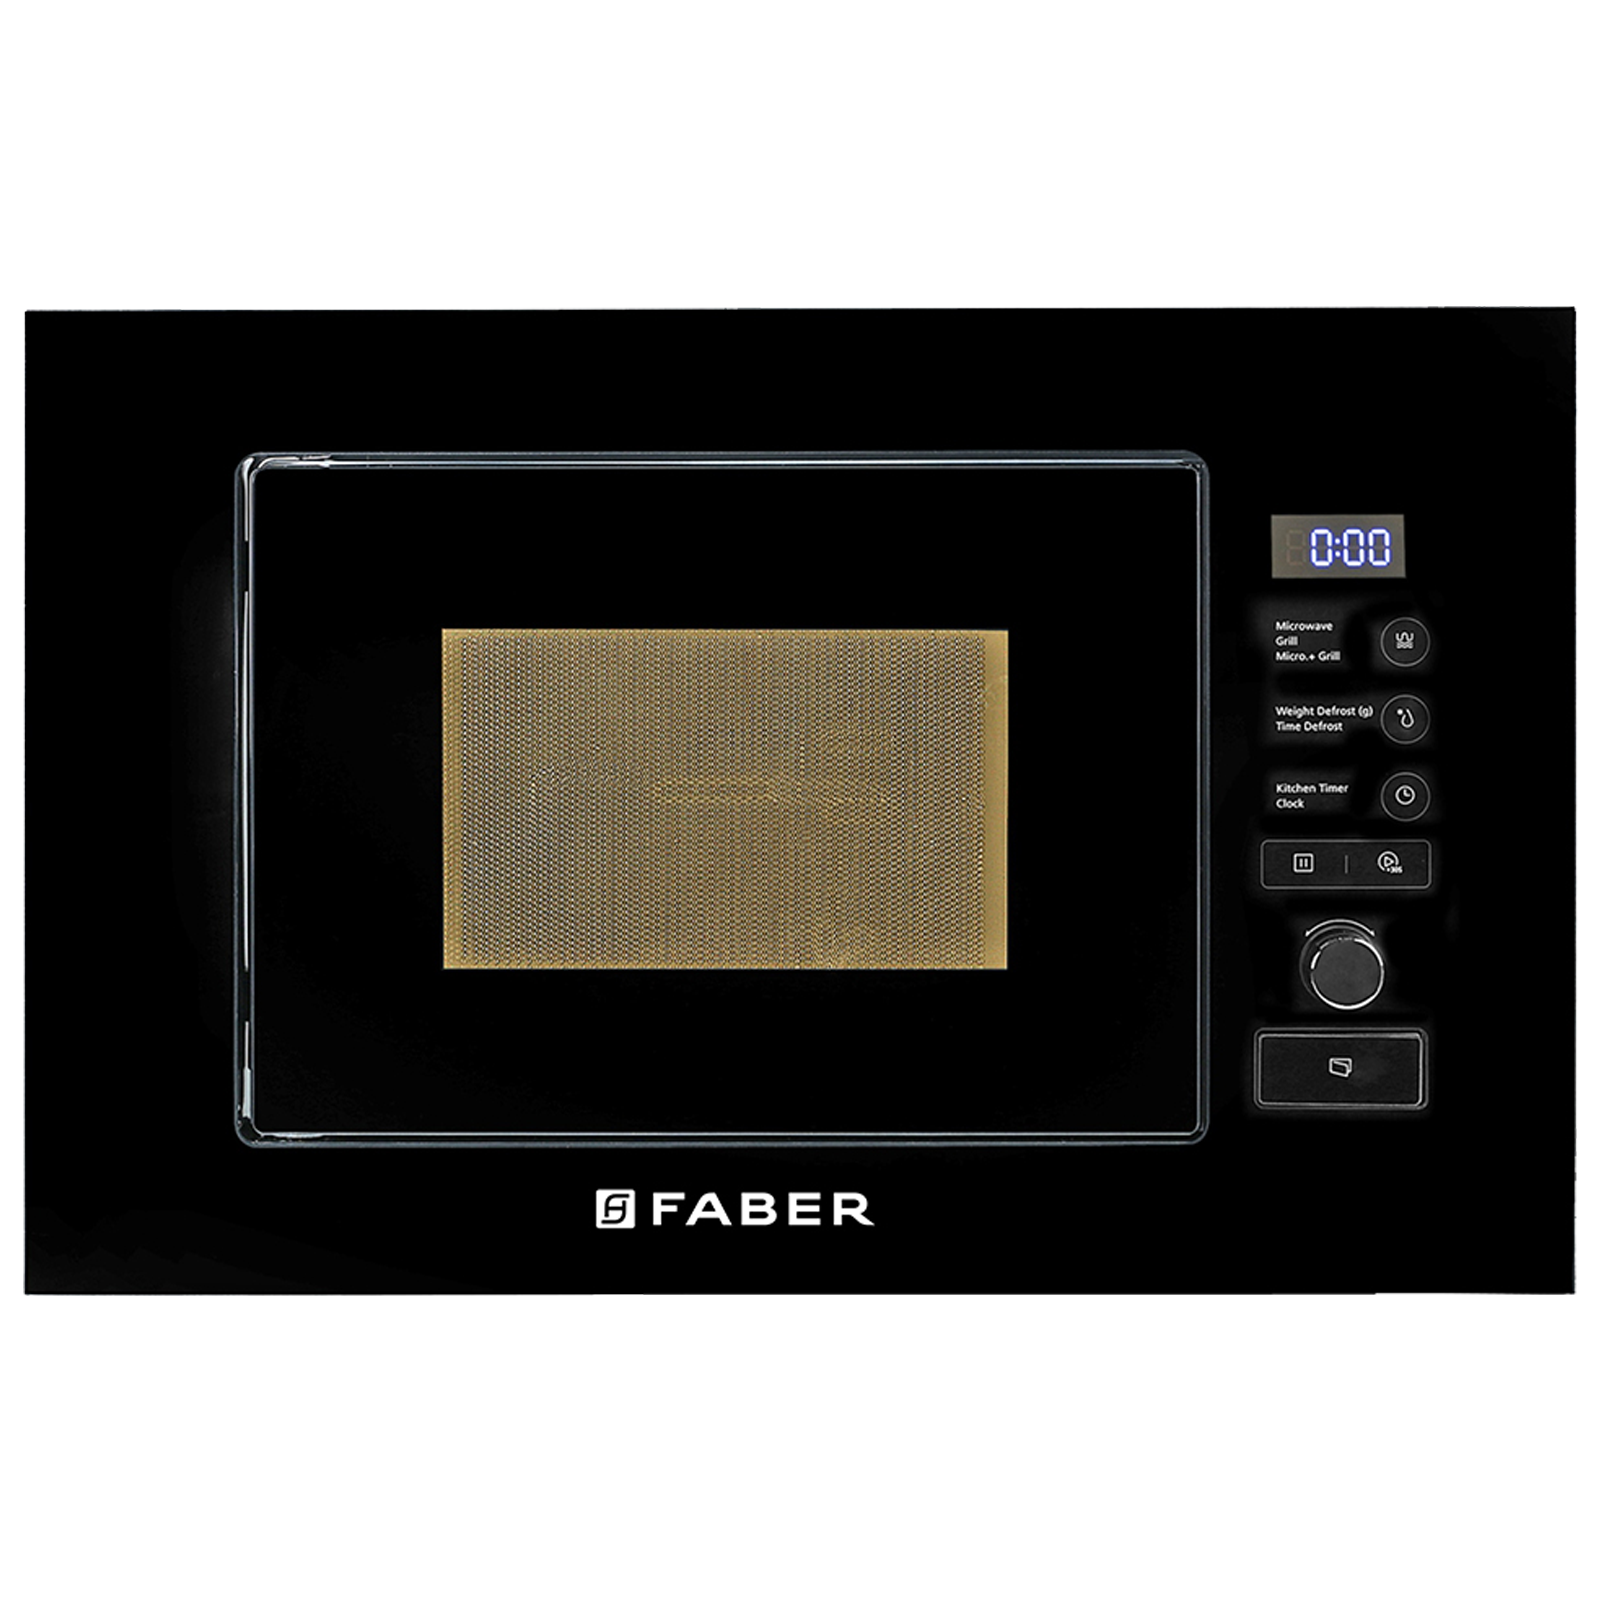 Faber FMBIMNO 20 Litres Built-in Microwave Oven (Digital Timer, 131.0520.808, Black)_1